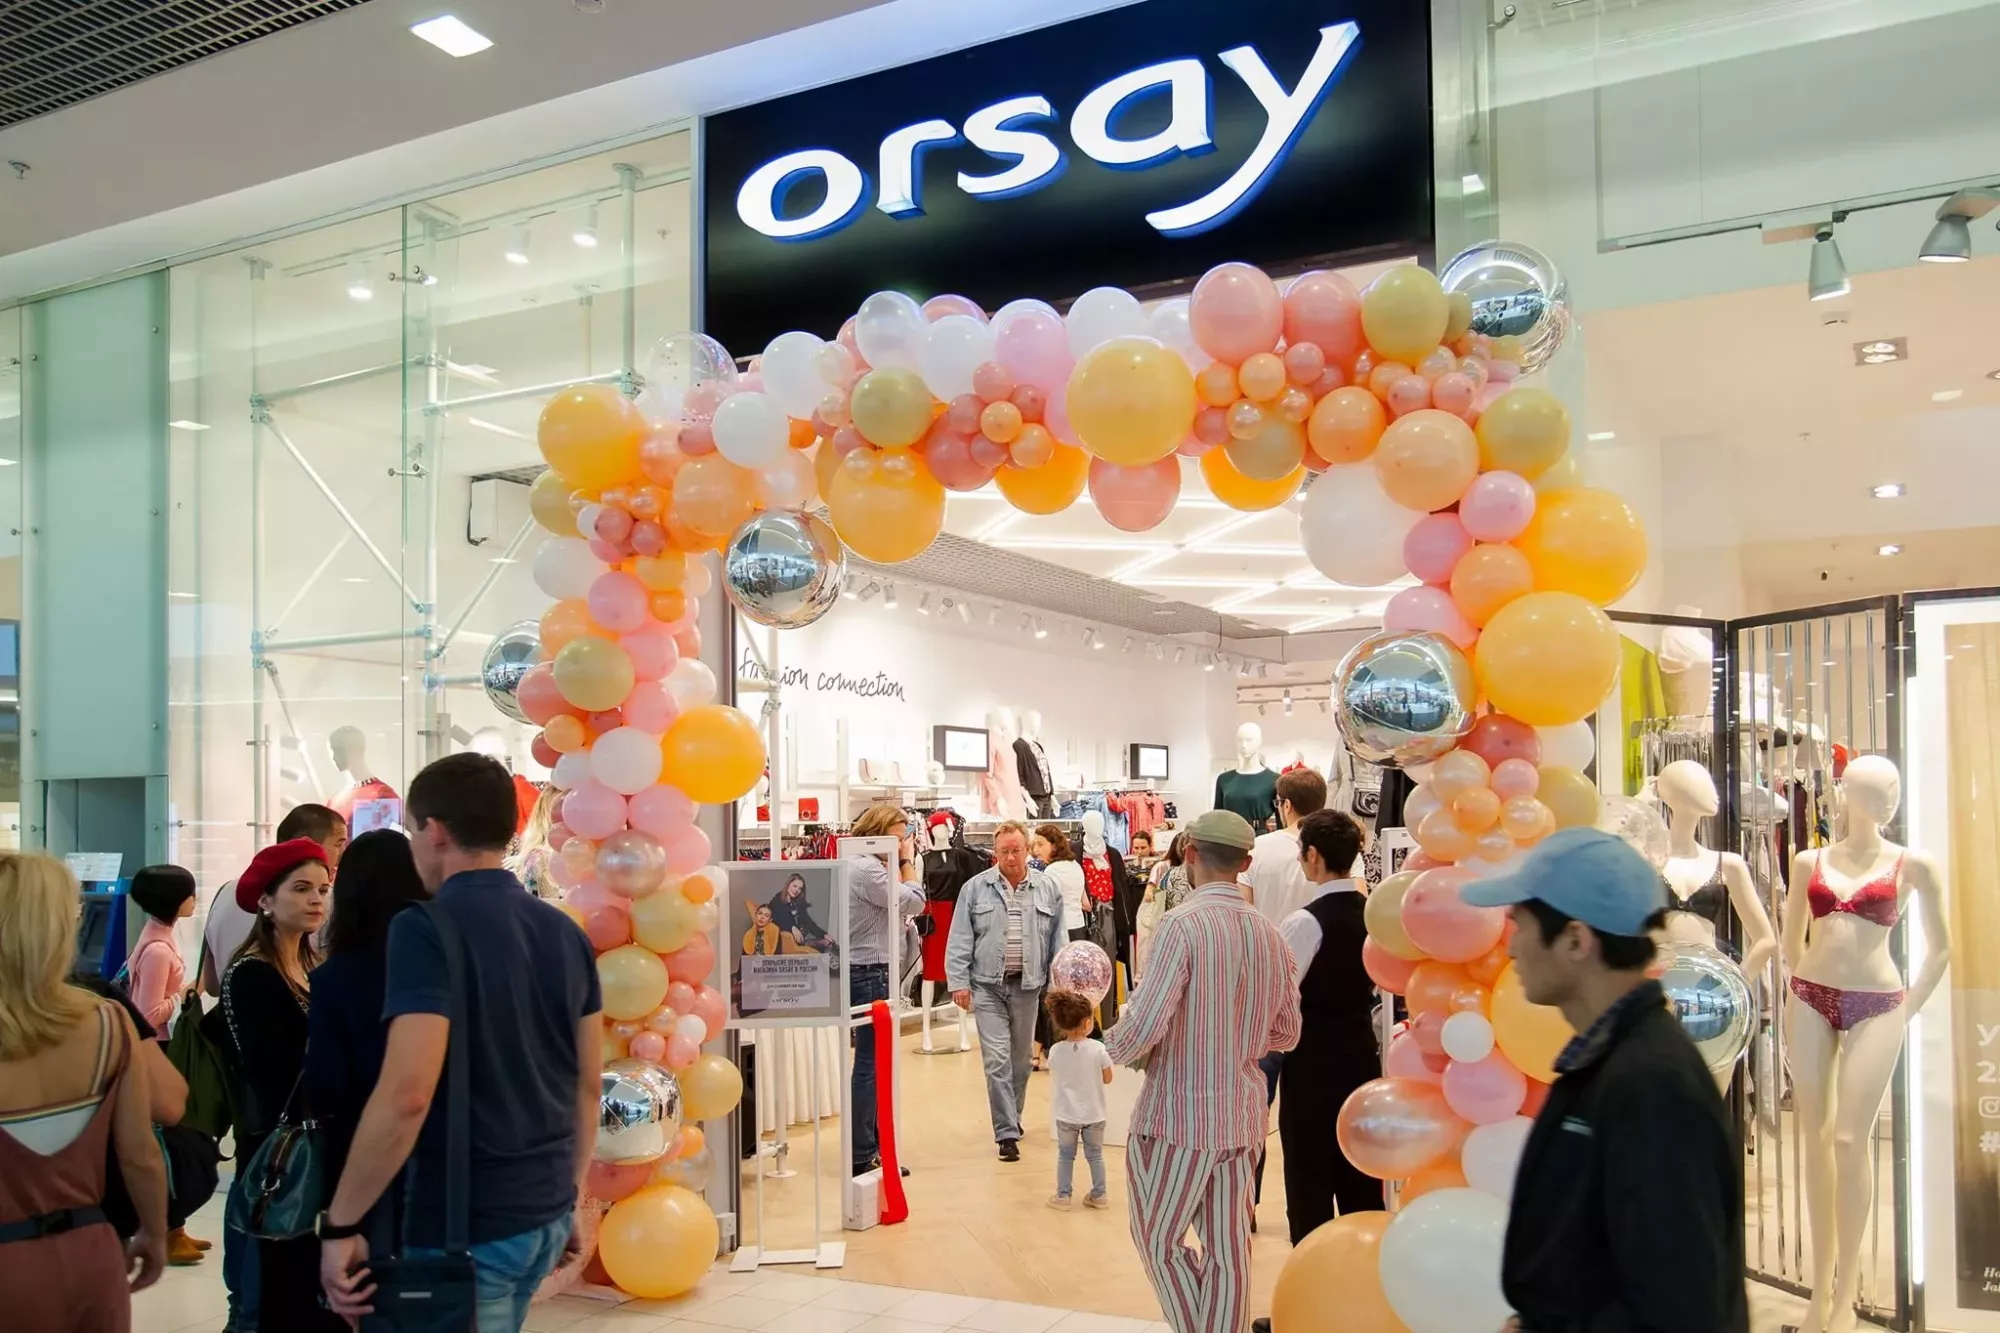 Orsay